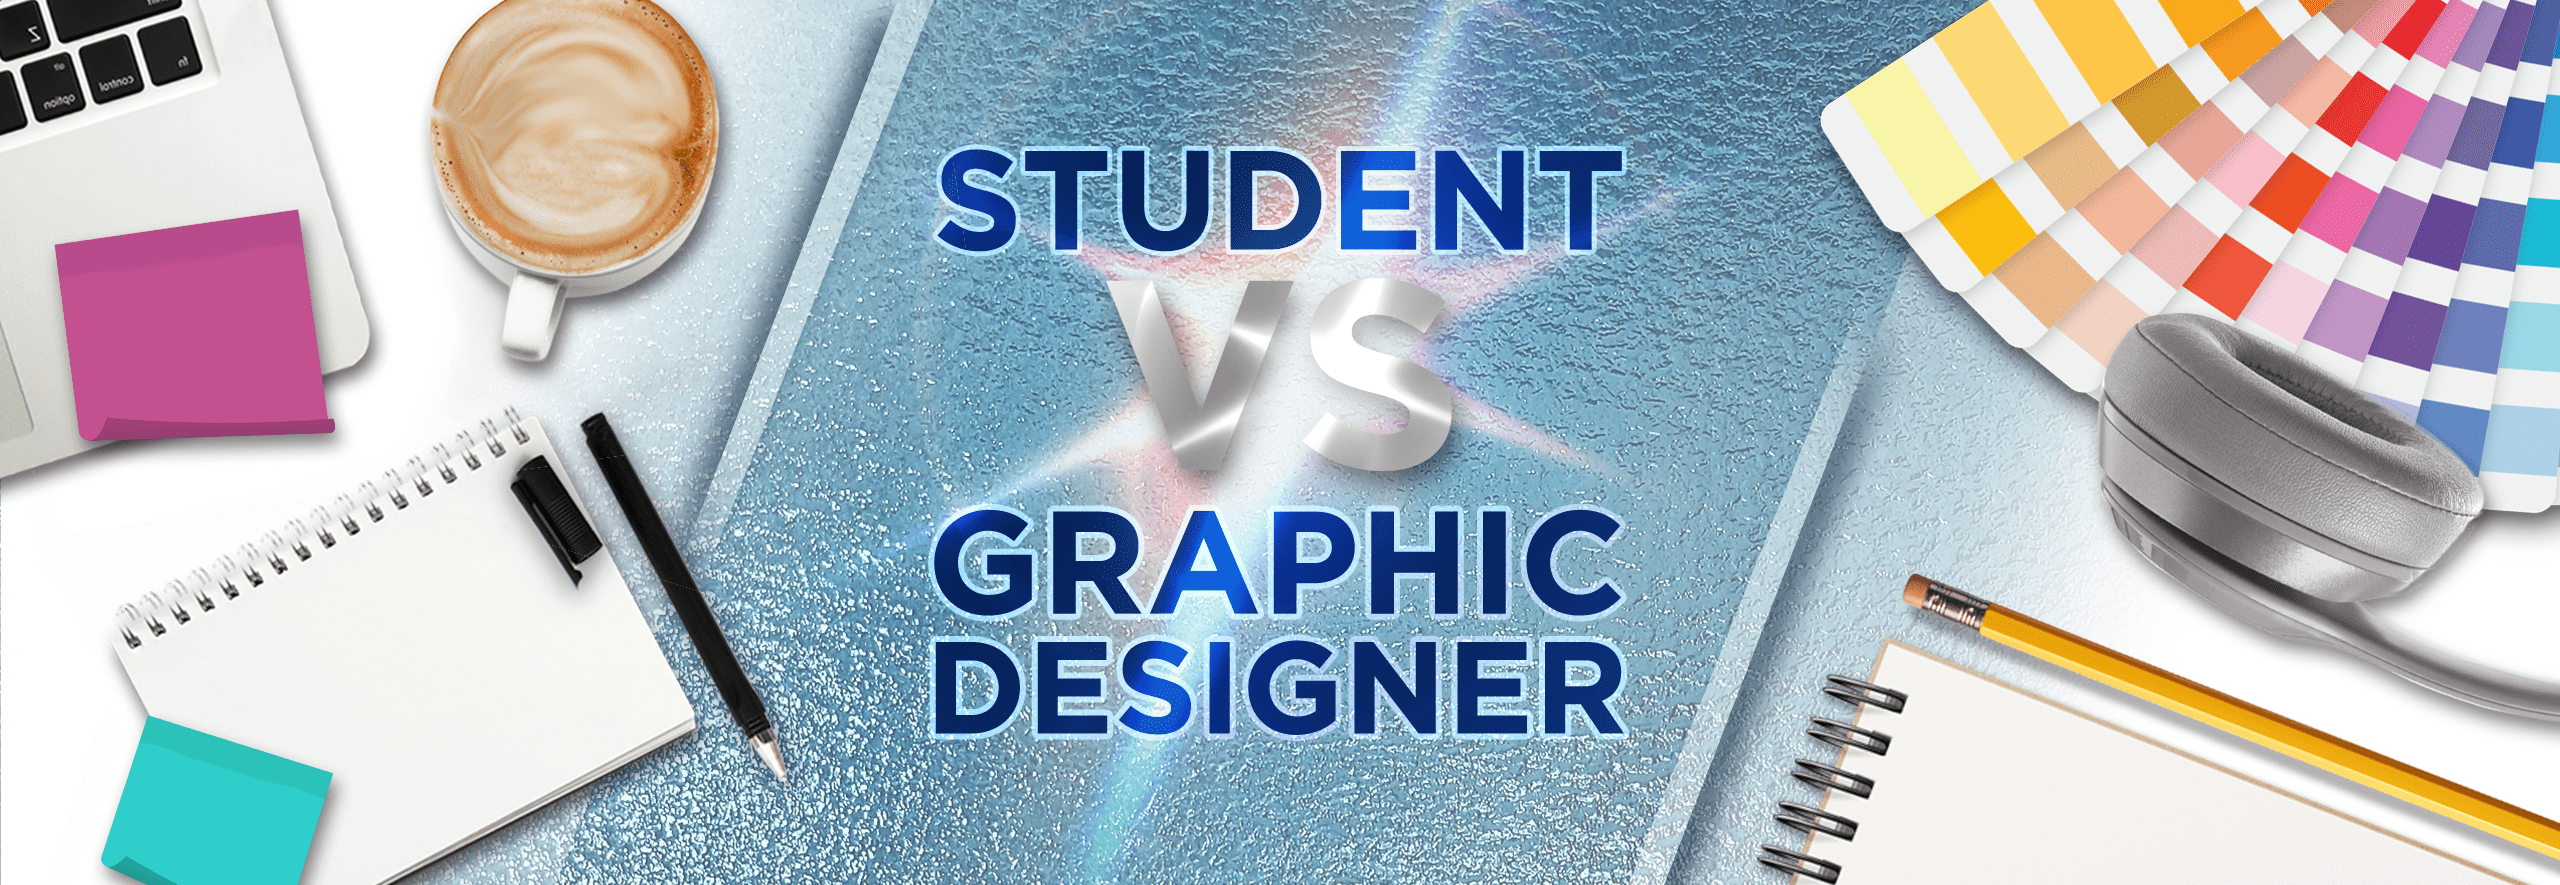 Student VS Graphic Designer